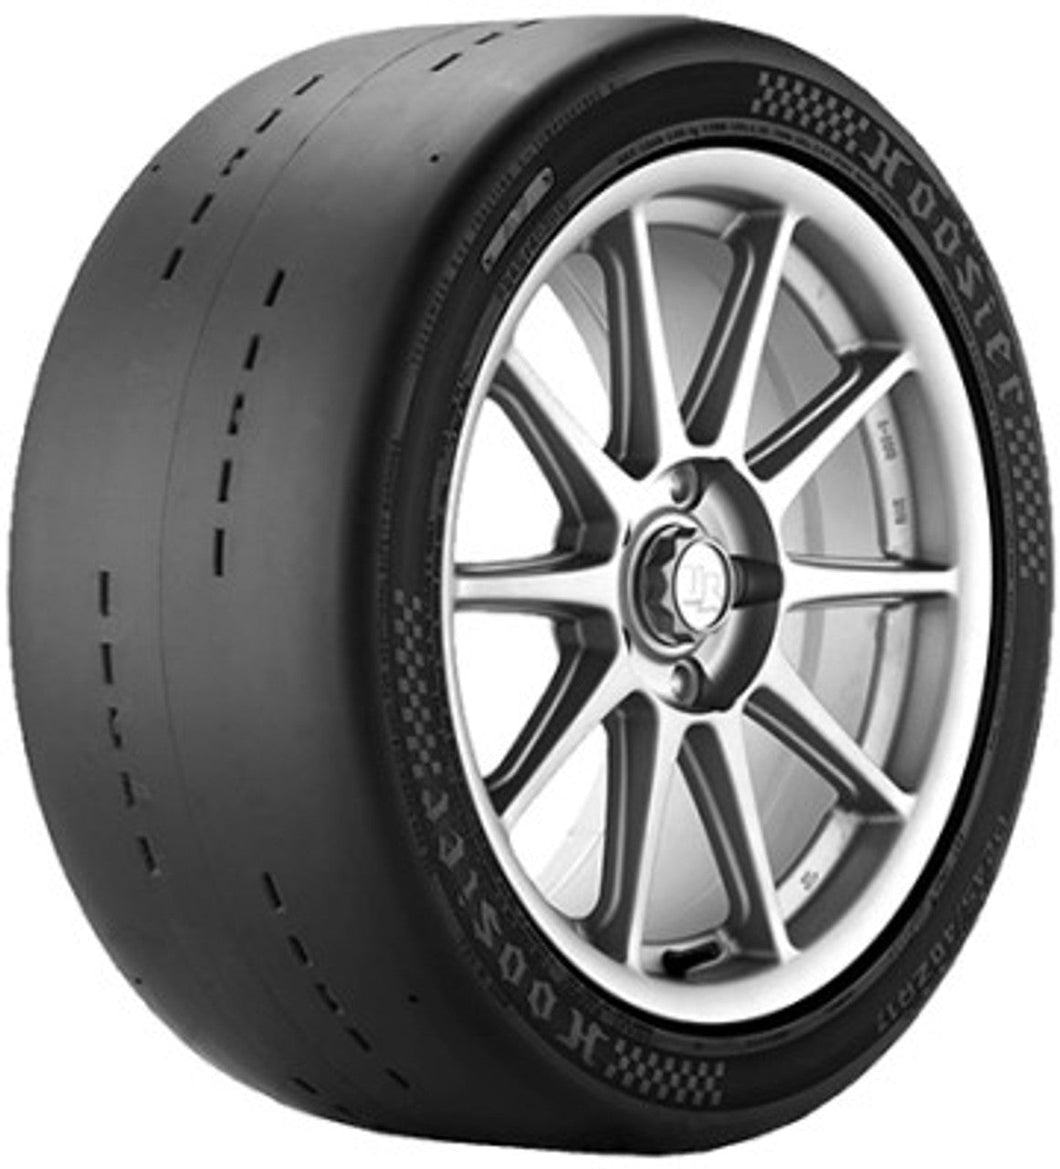 205/45 ZR16 Hoosier Tire Slick D.O.T Neumático